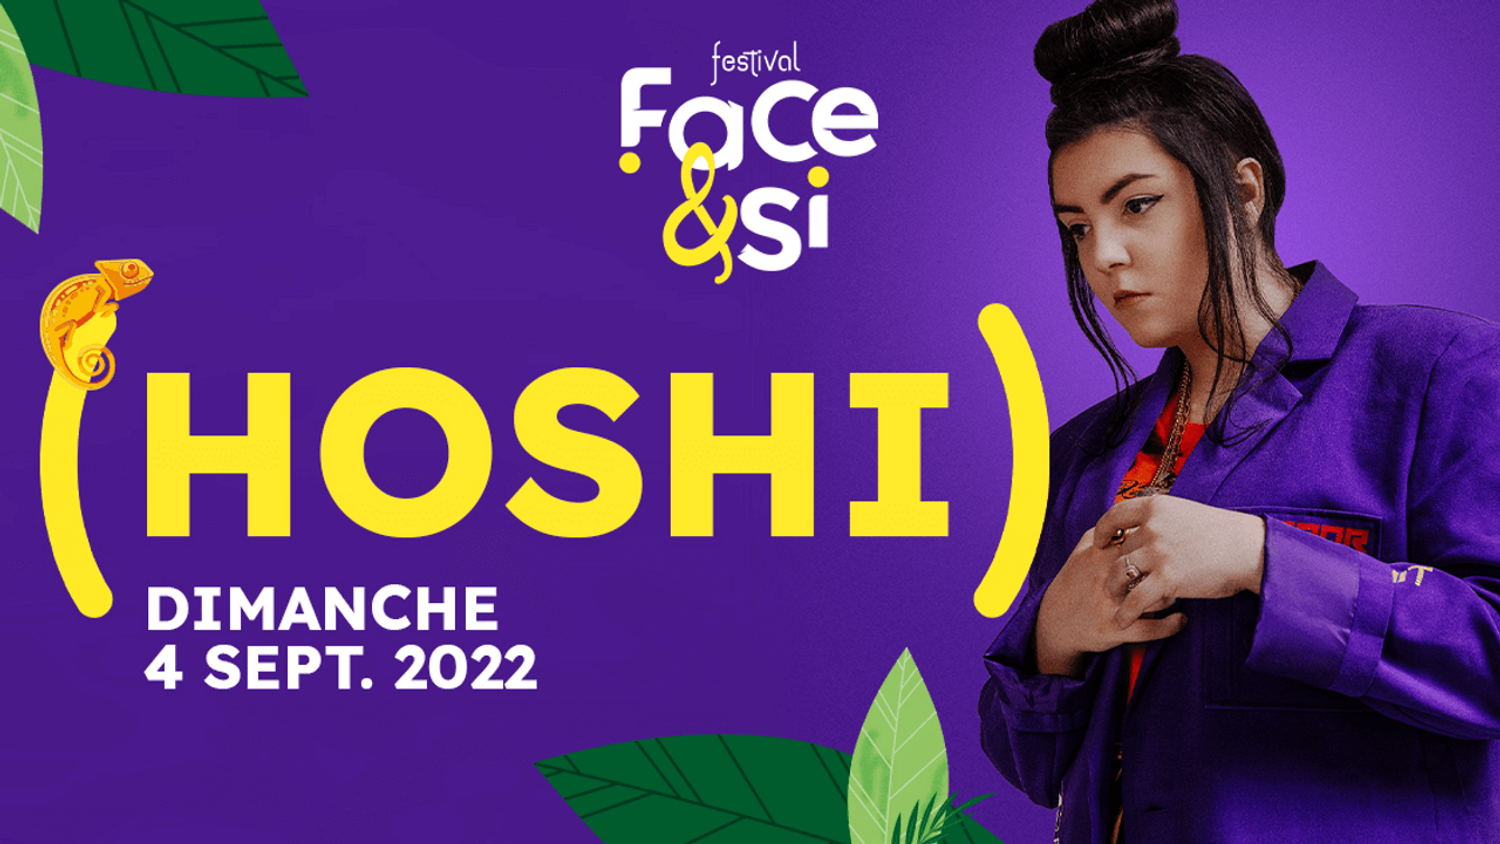 Hoshi rejoint la programmation du festival Face & Si